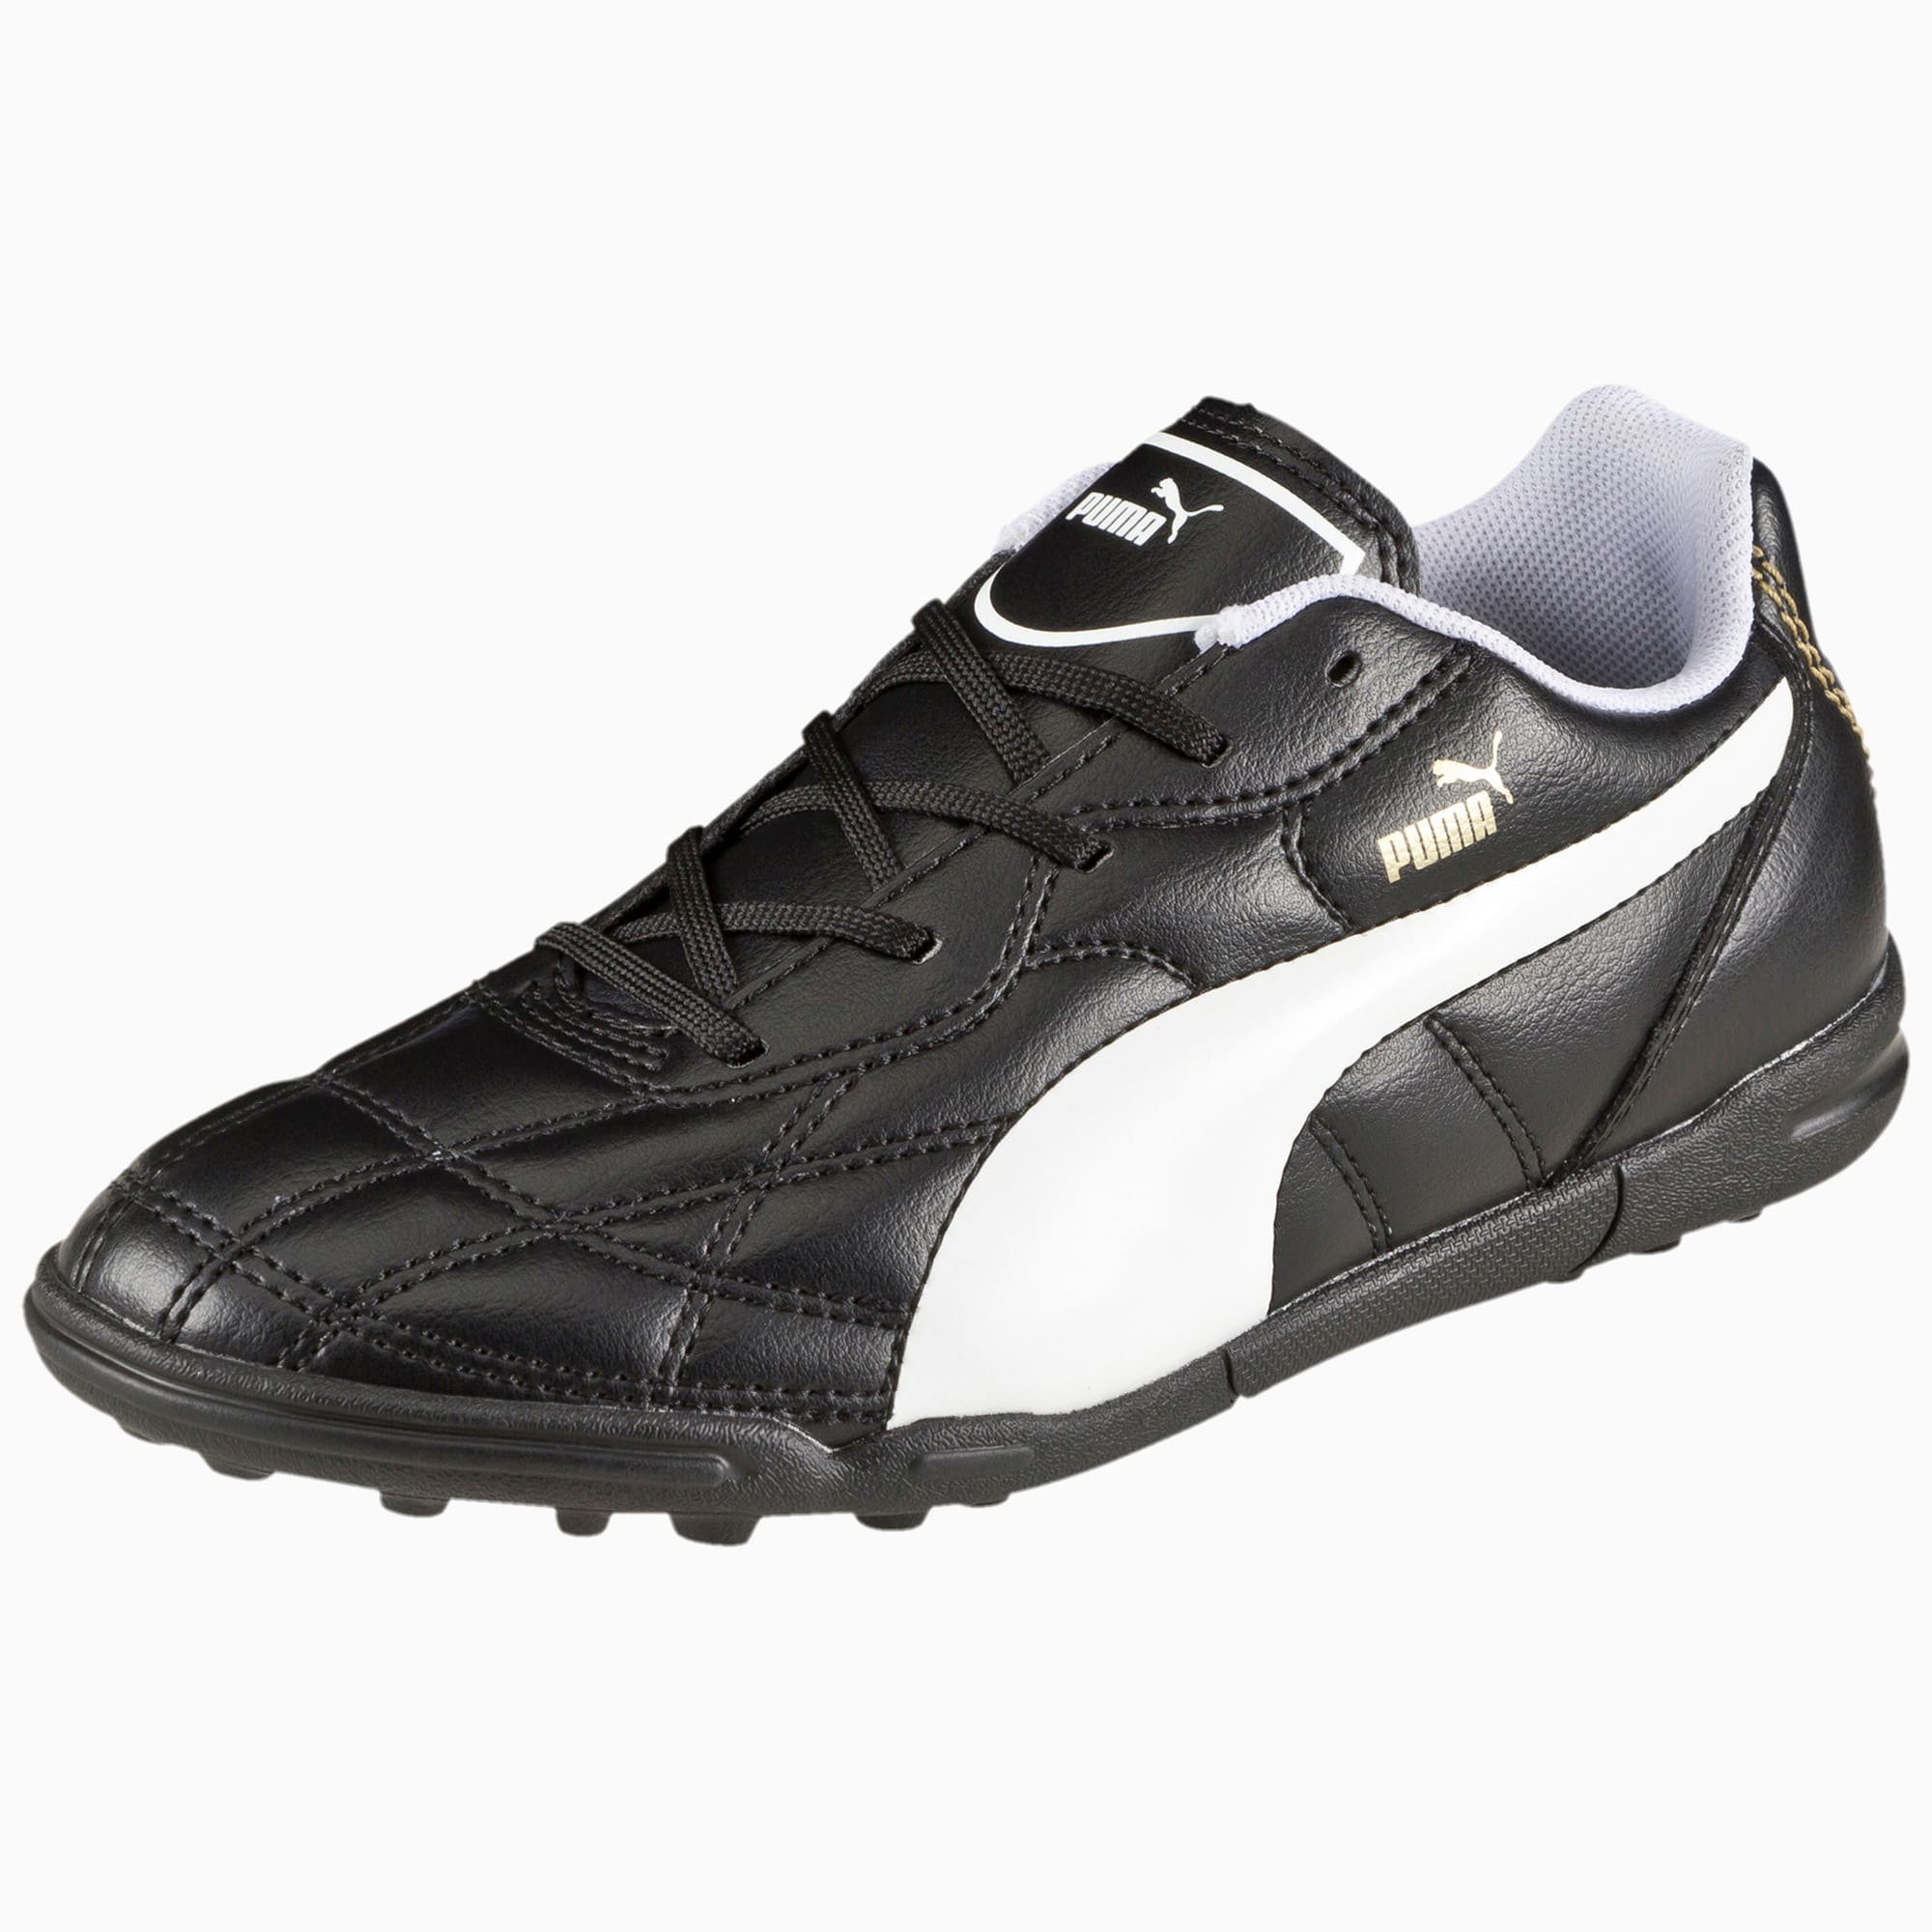 puma classico tt black football shoes